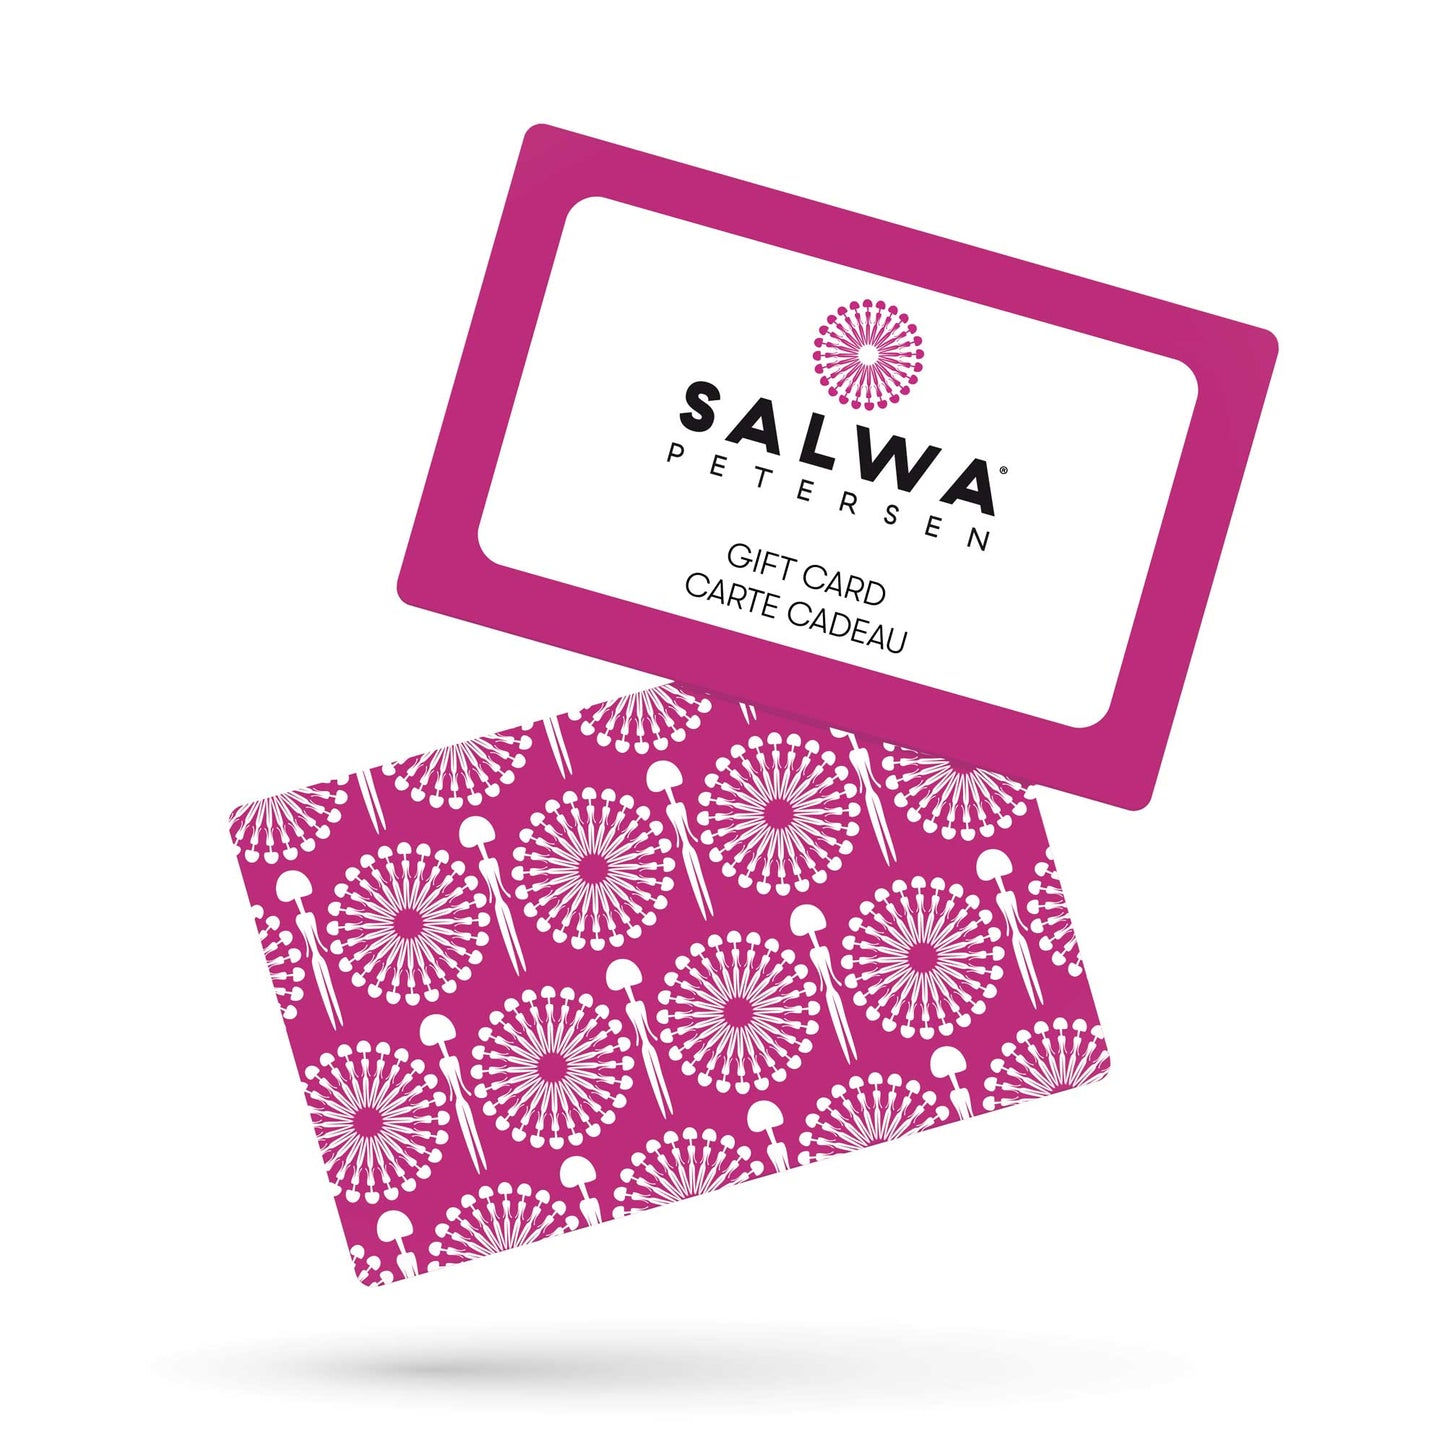 SALWA PETERSEN Digital Gift Card